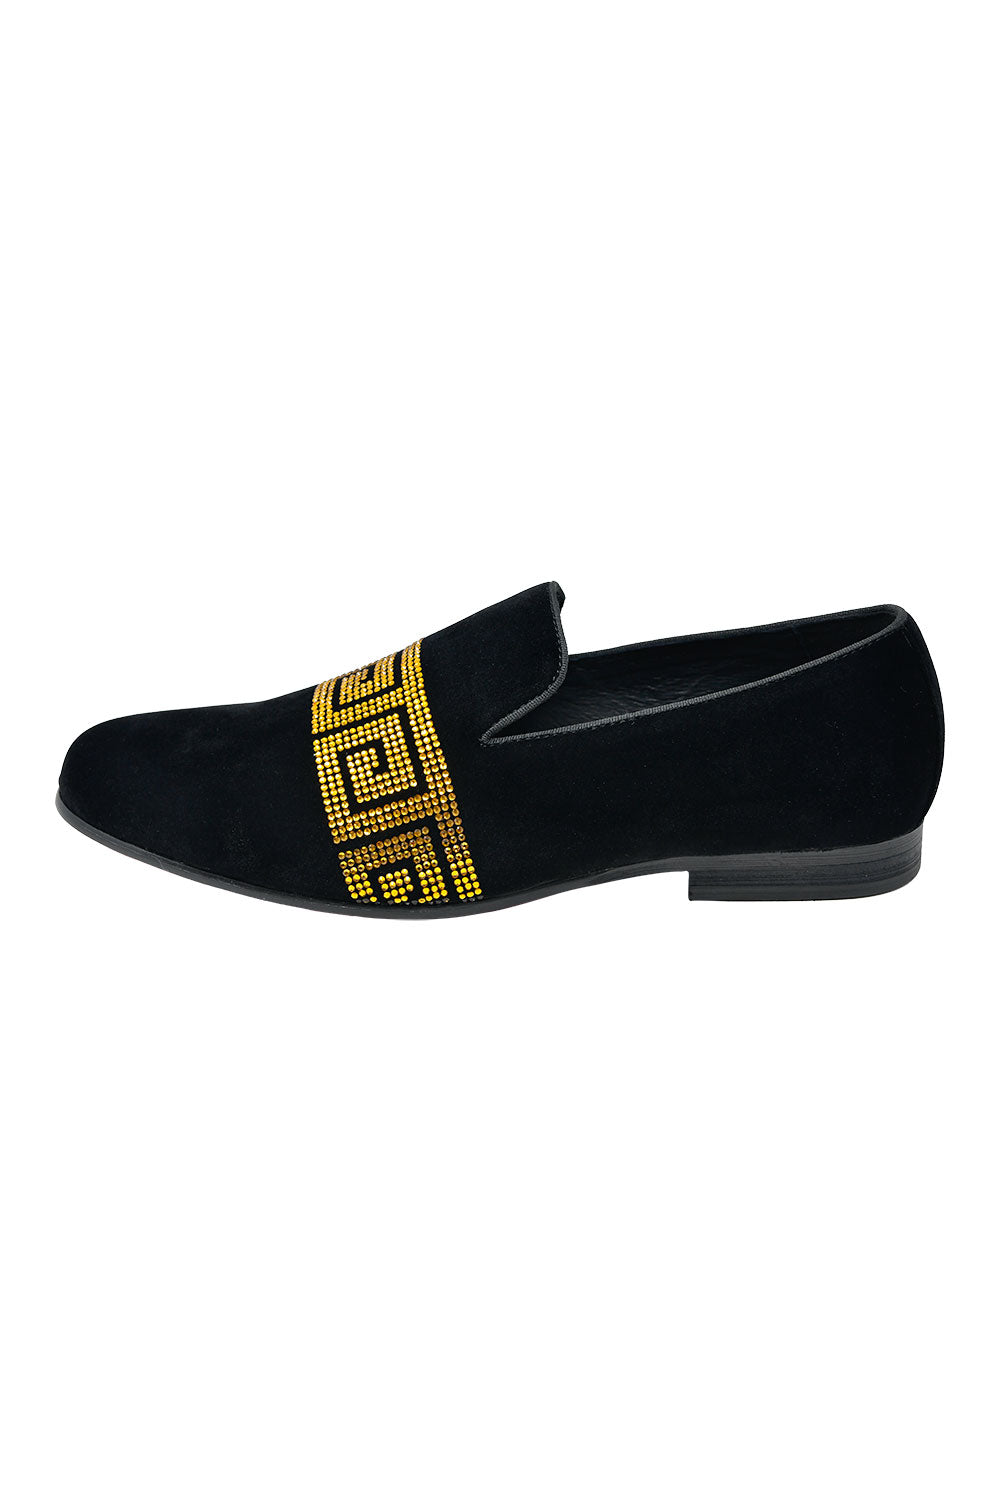 BARABAS Men's Rhinestone Greek key Pattern Slip On Dress Shoes SH3067 Black Gold